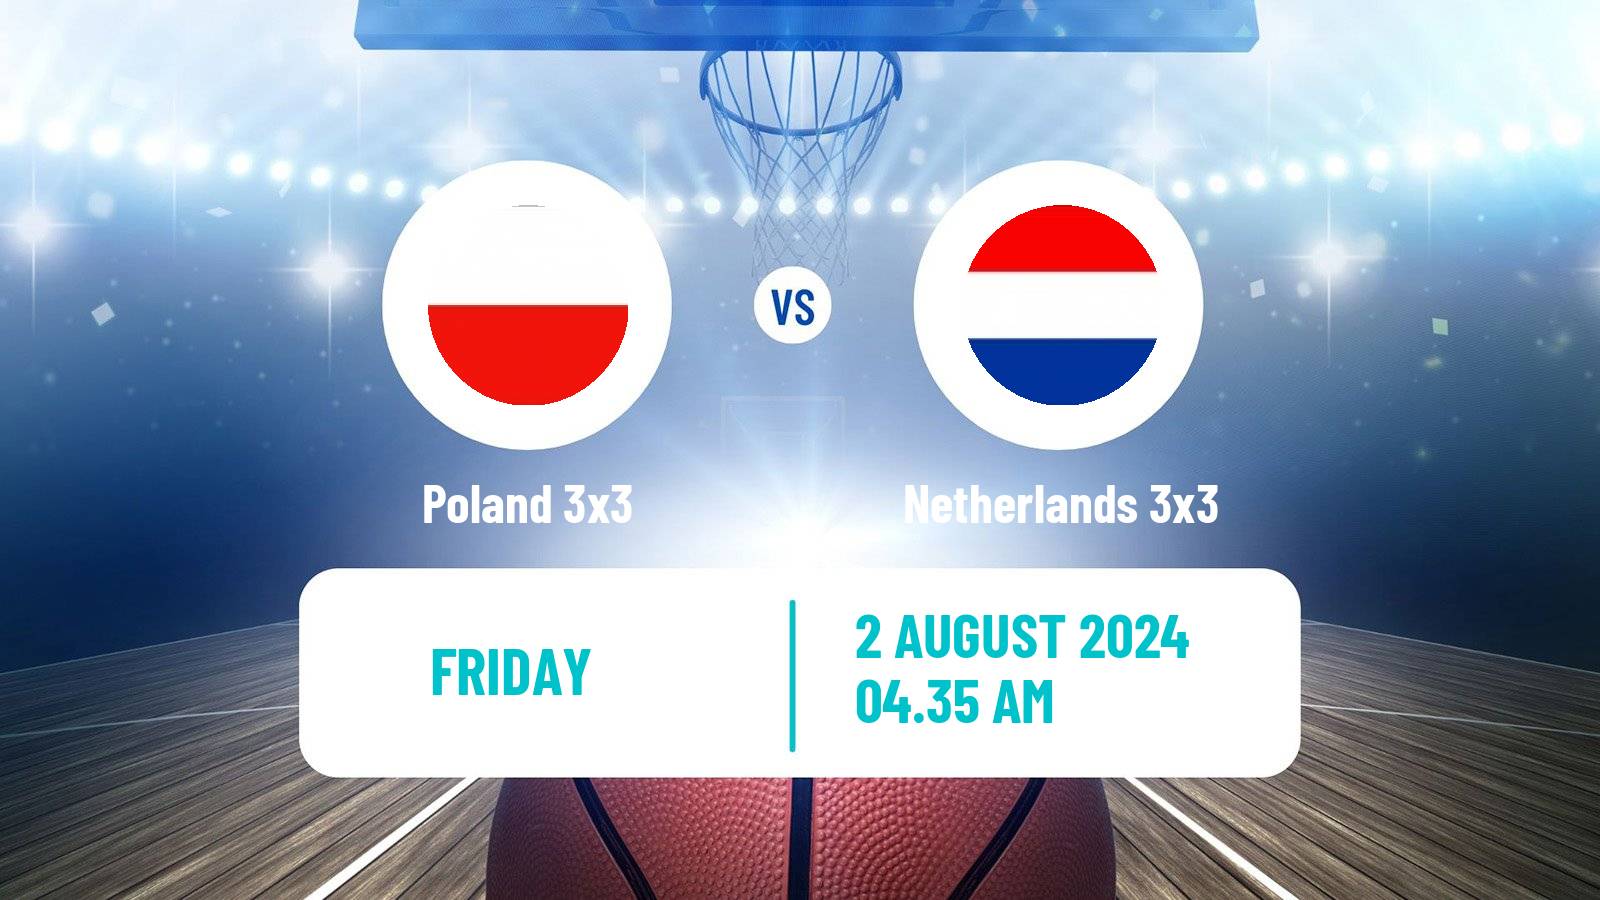 Basketball Olympic Games Basketball 3x3 Poland 3x3 - Netherlands 3x3